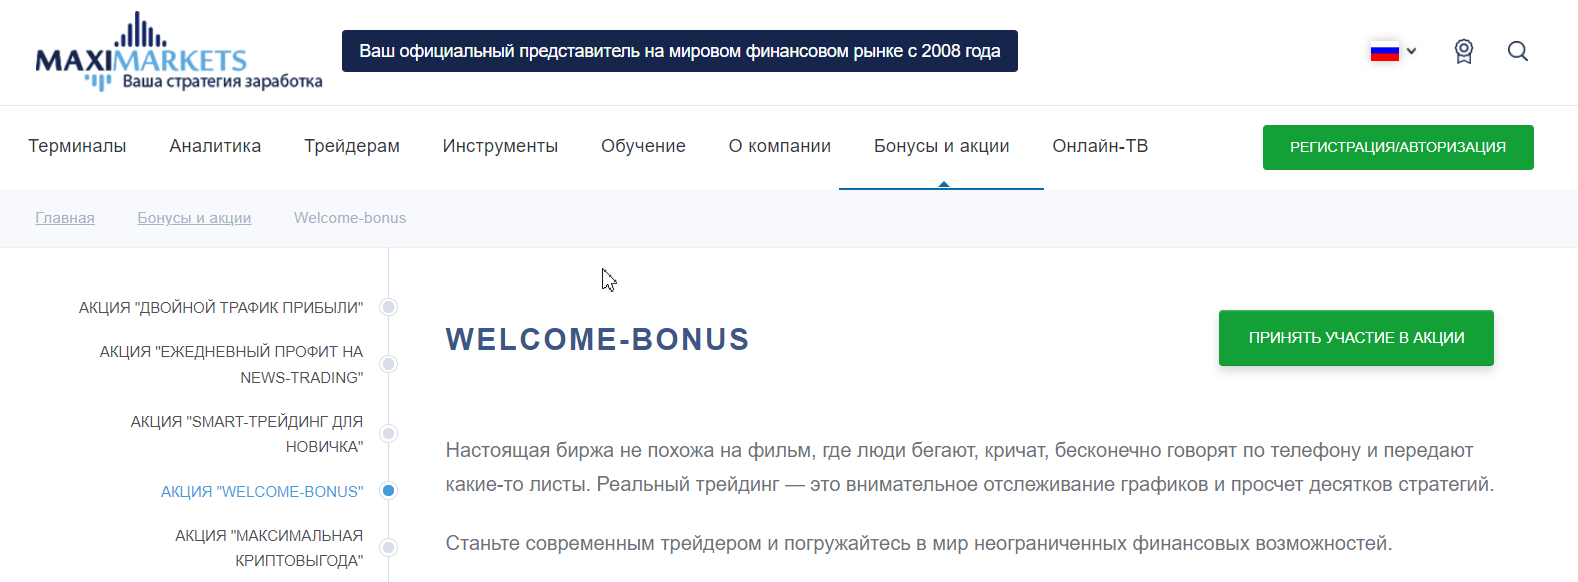 Бонусы от Maximarkets - Welcome bonus